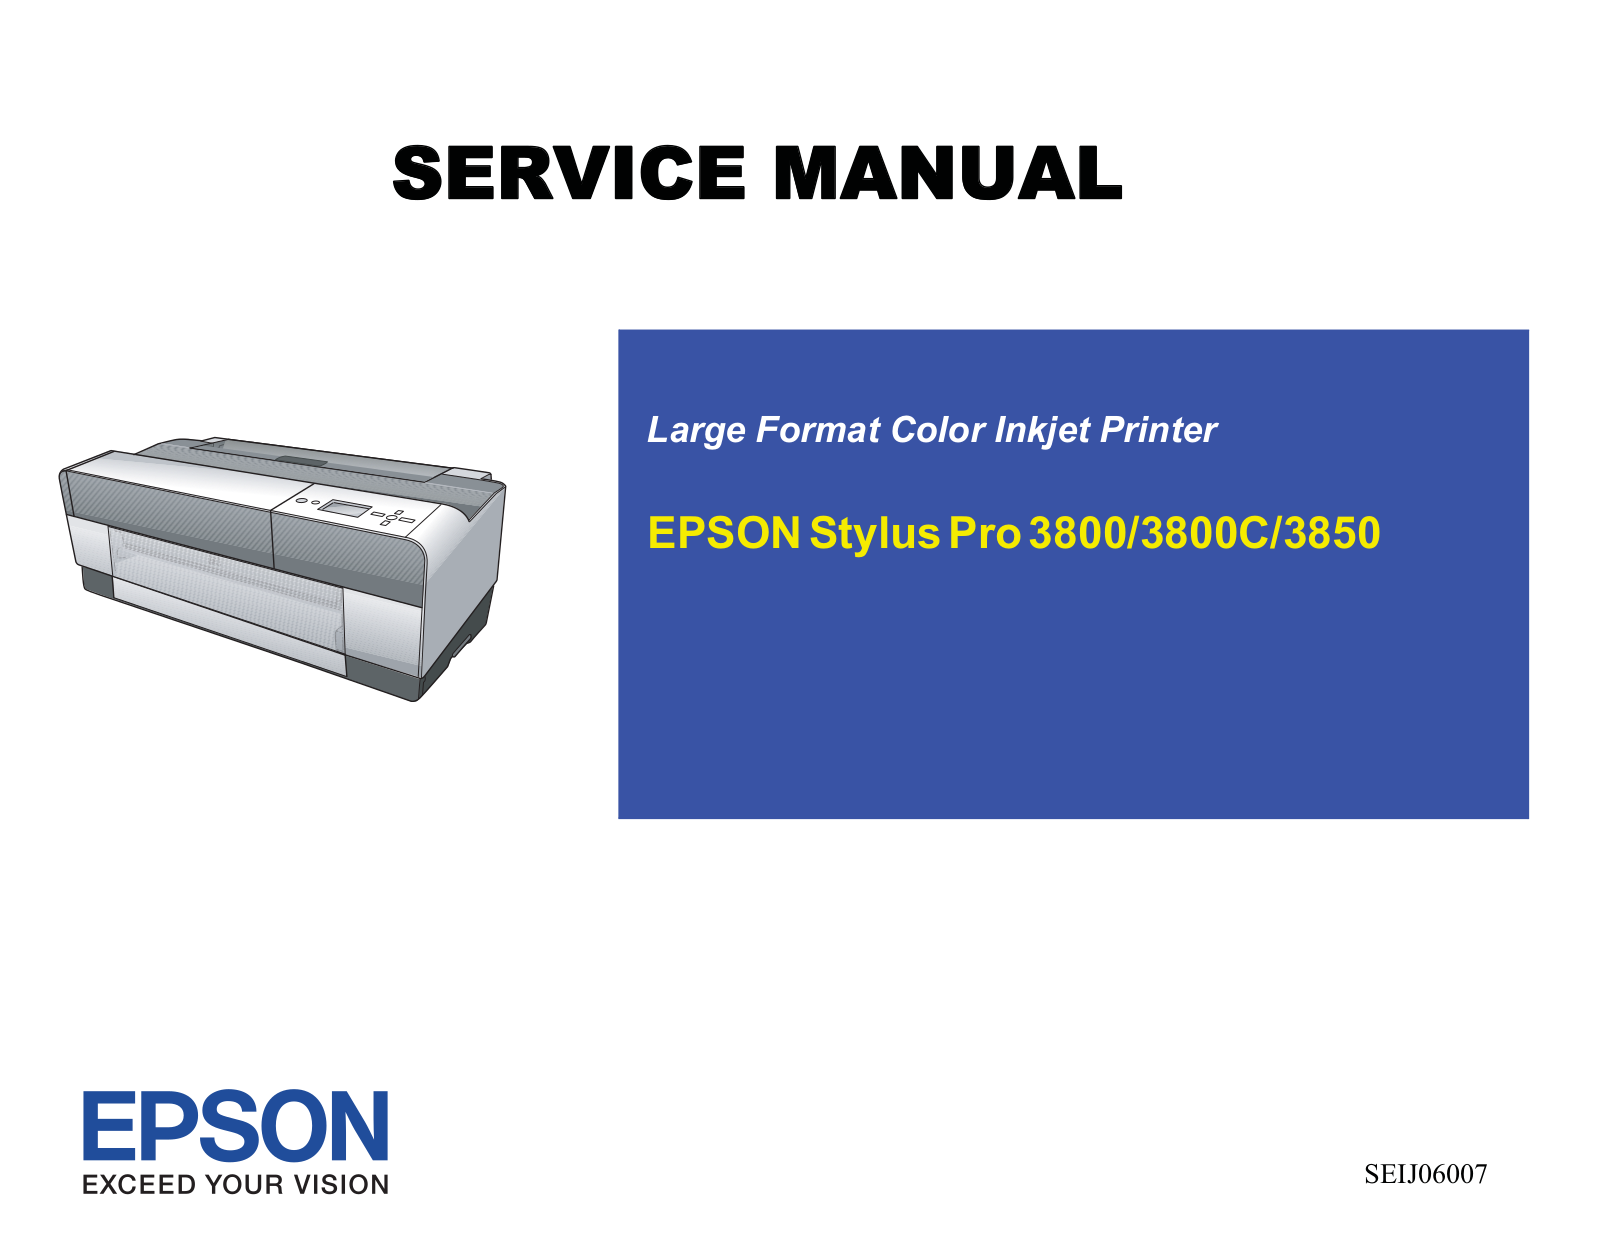 Epson Stylus Pro 3800, Stylus Pro 3800C, Stylus Pro 3850 Service Manual